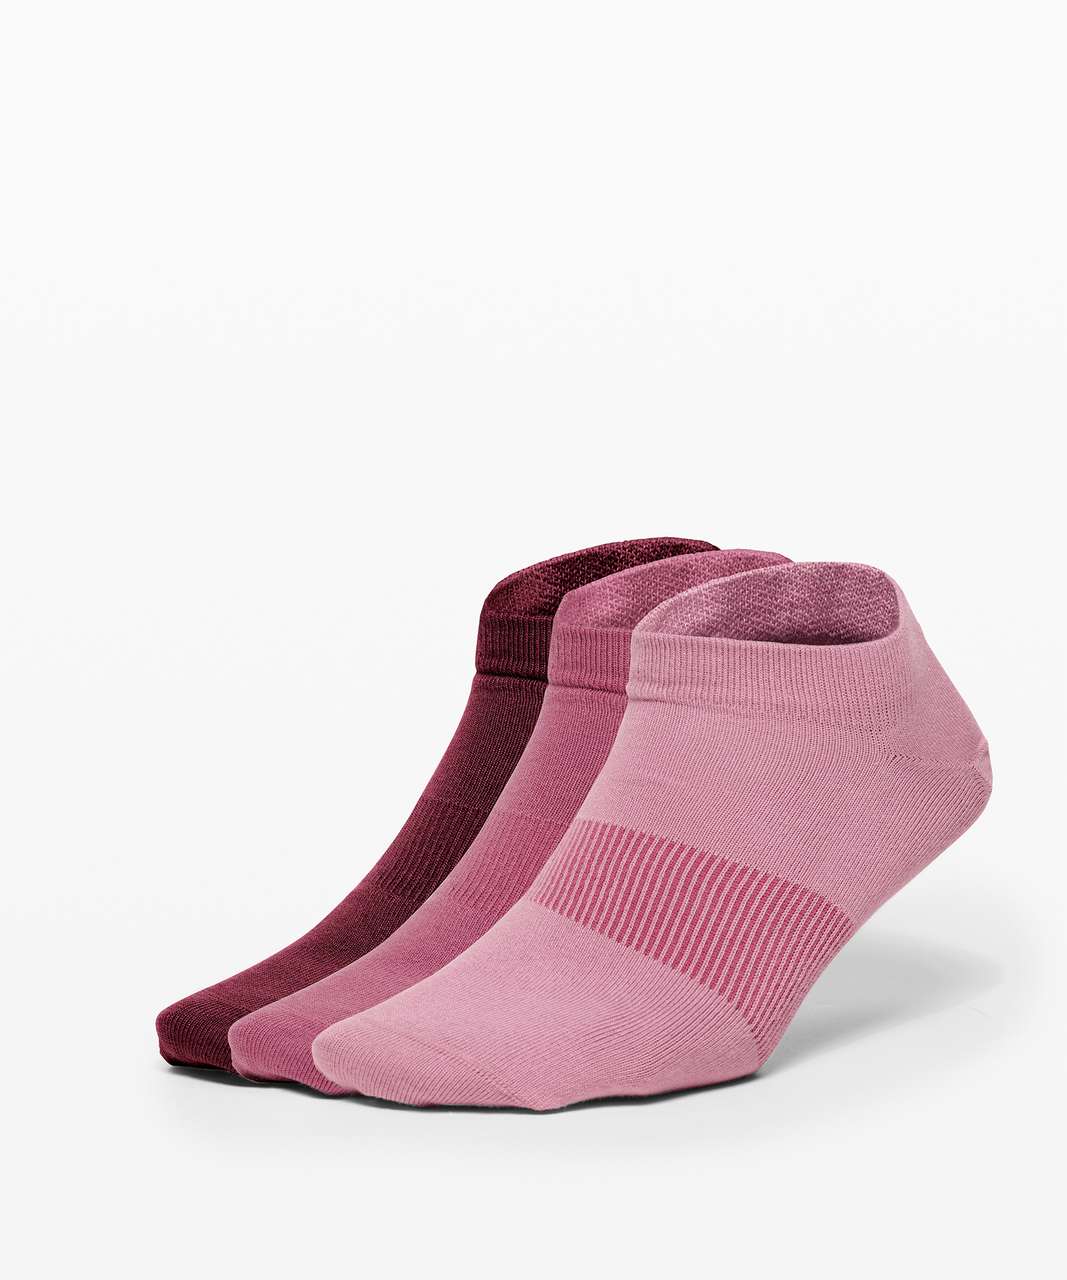 Lululemon Secret Sock *3-Pack - Pink Taupe / Moss Rose / Garnet